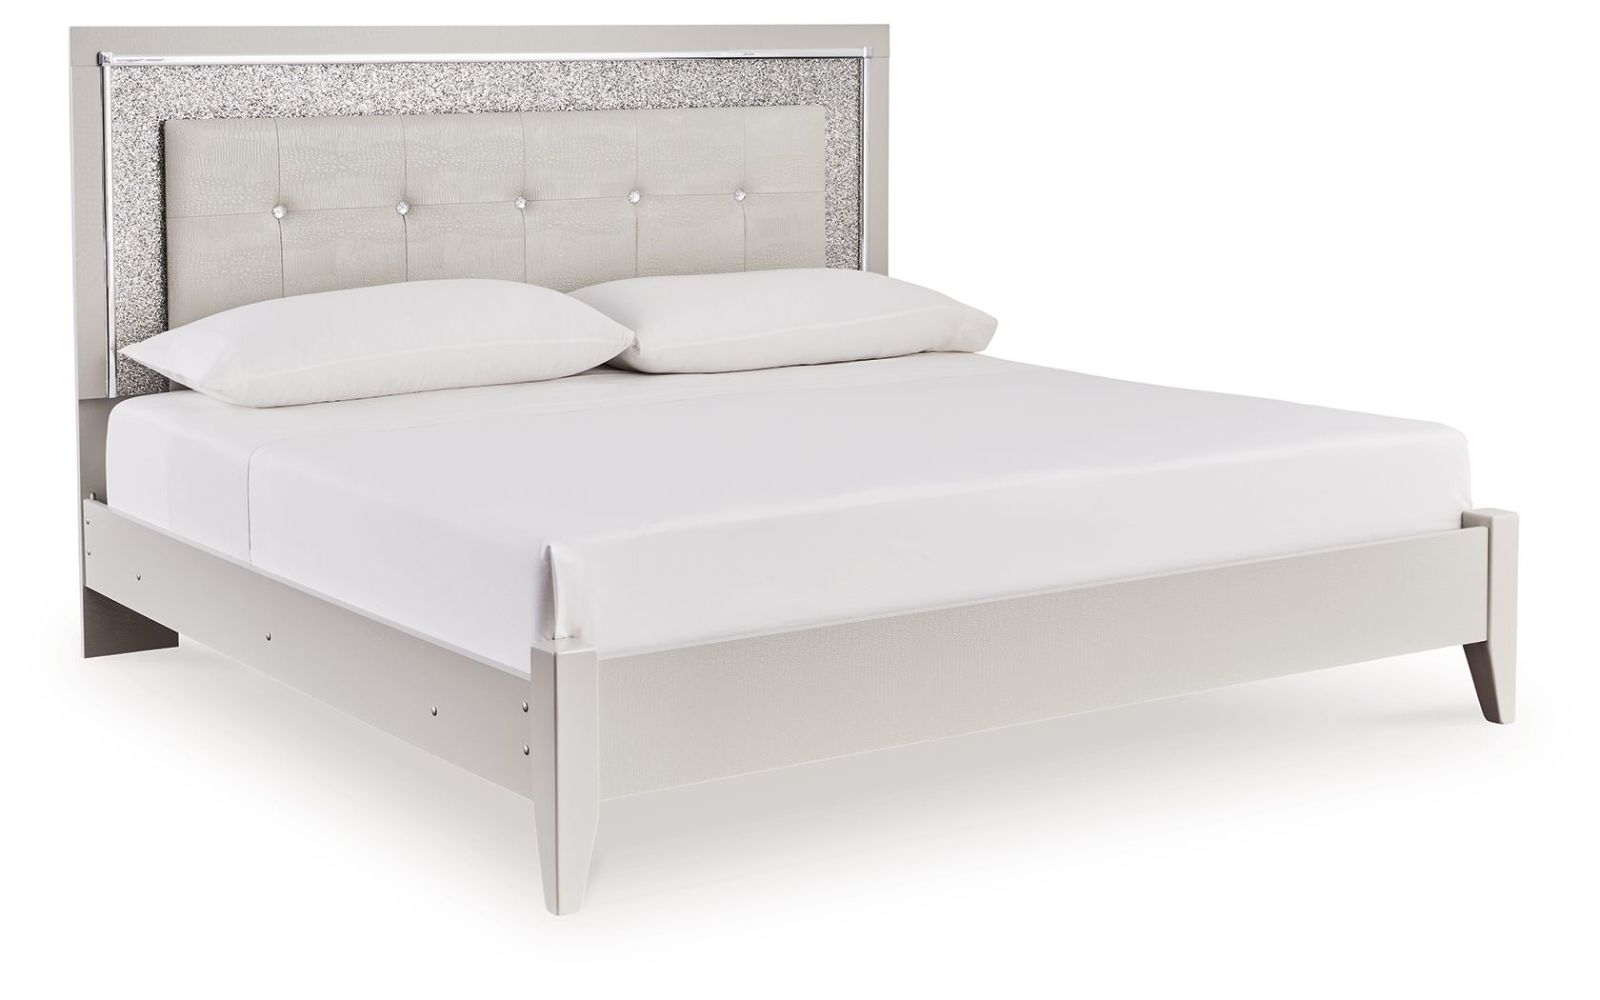 Zyniden – Silver – King Upholstered Panel Bed B2114B3